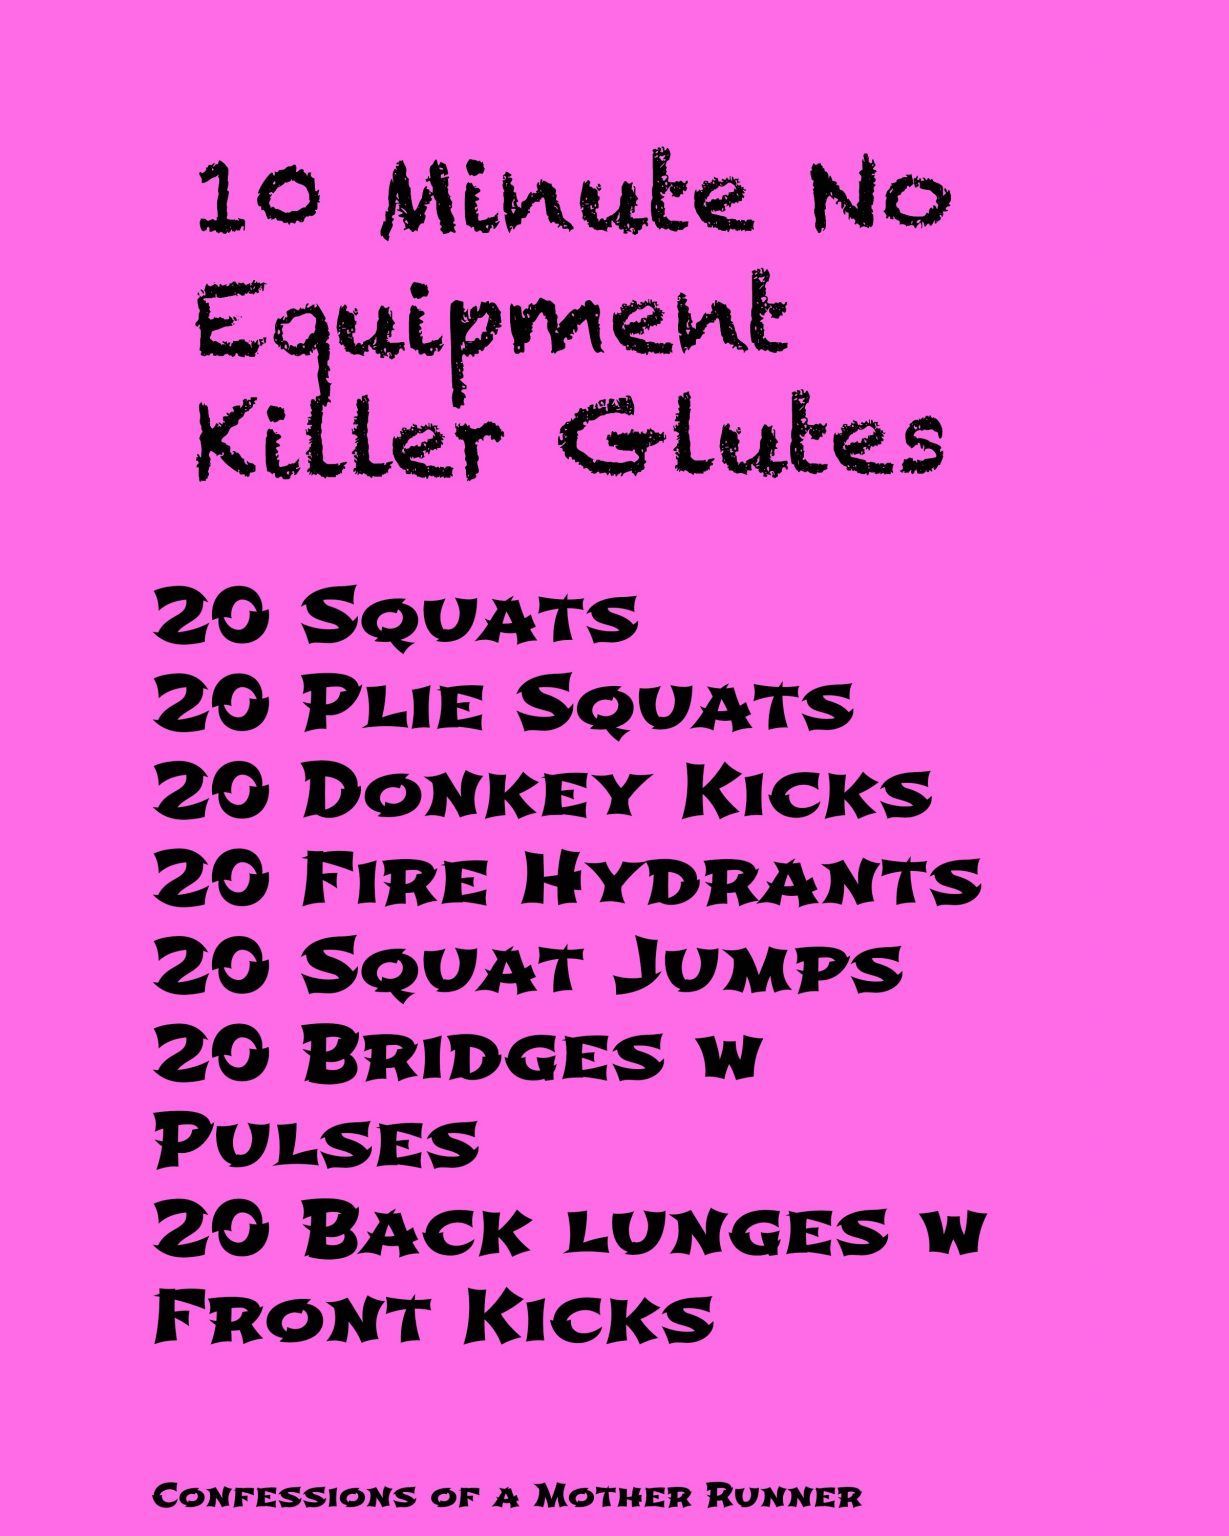 10 minute no equipment at home killer Glutes workout - 10 minute no equipment at home killer Glutes workout -   19 fitness Equipment workout ideas